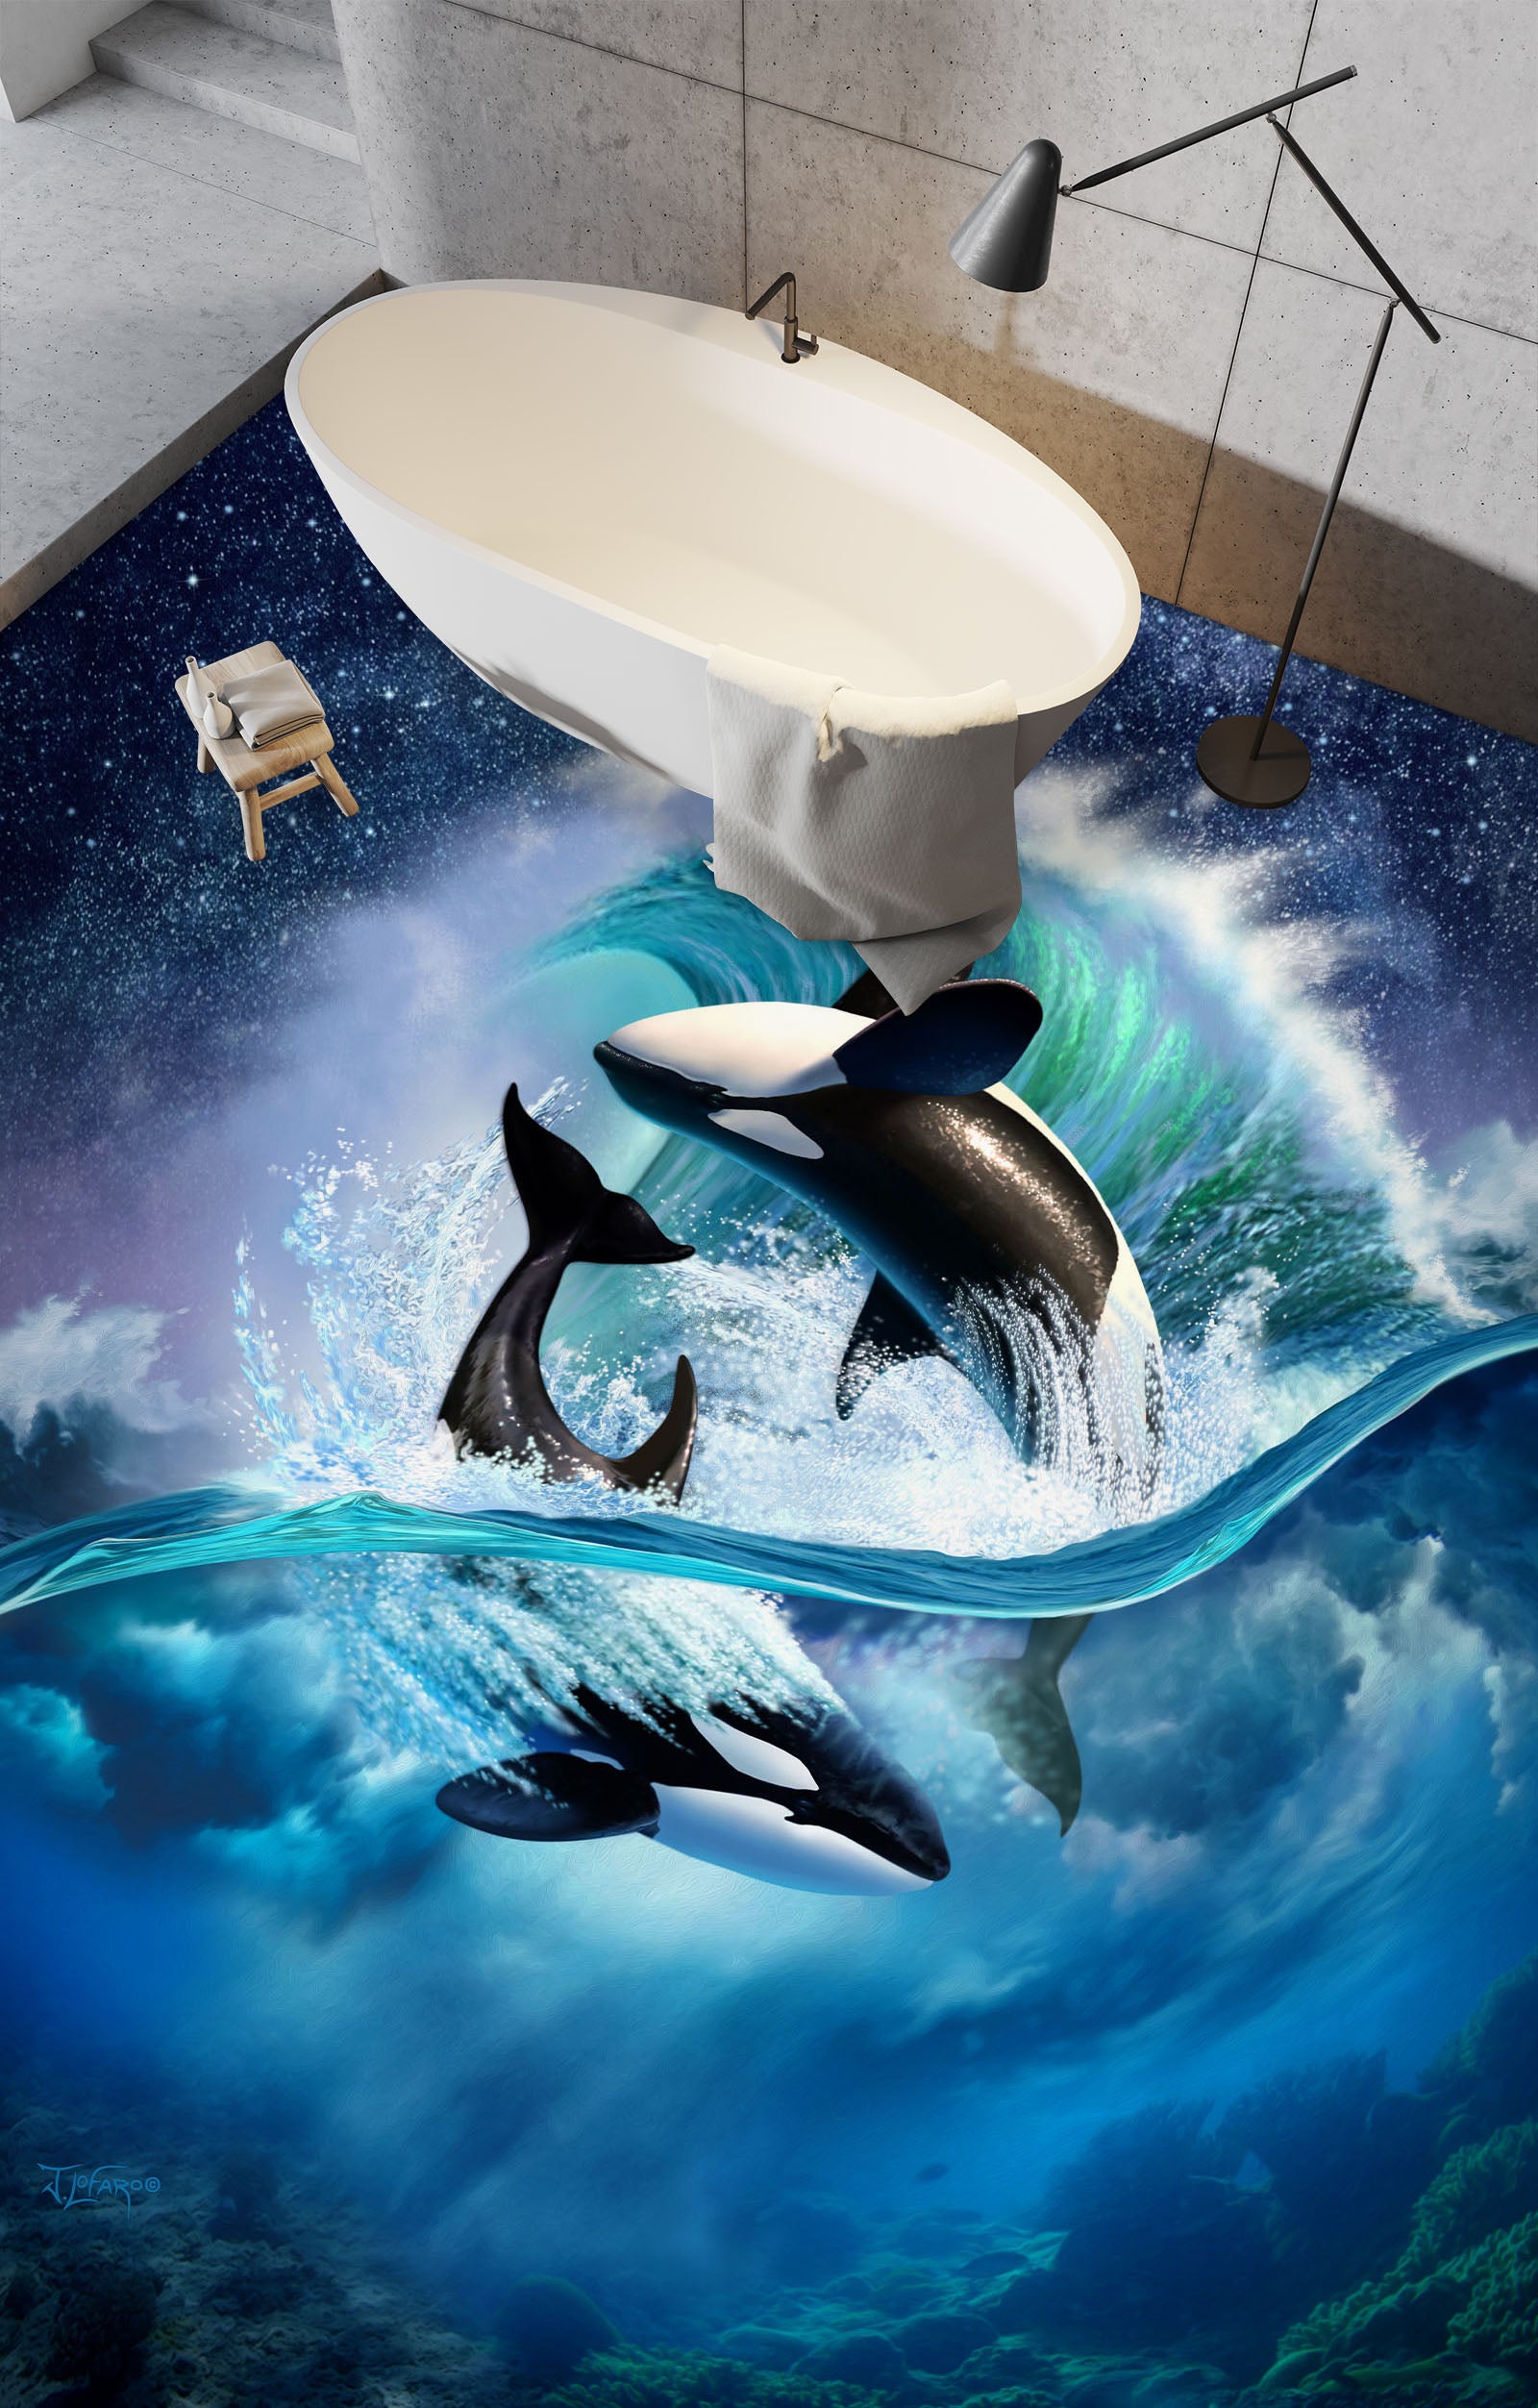 3D Whale Waves 96223 Jerry LoFaro Floor Mural  Wallpaper Murals Self-Adhesive Removable Print Epoxy